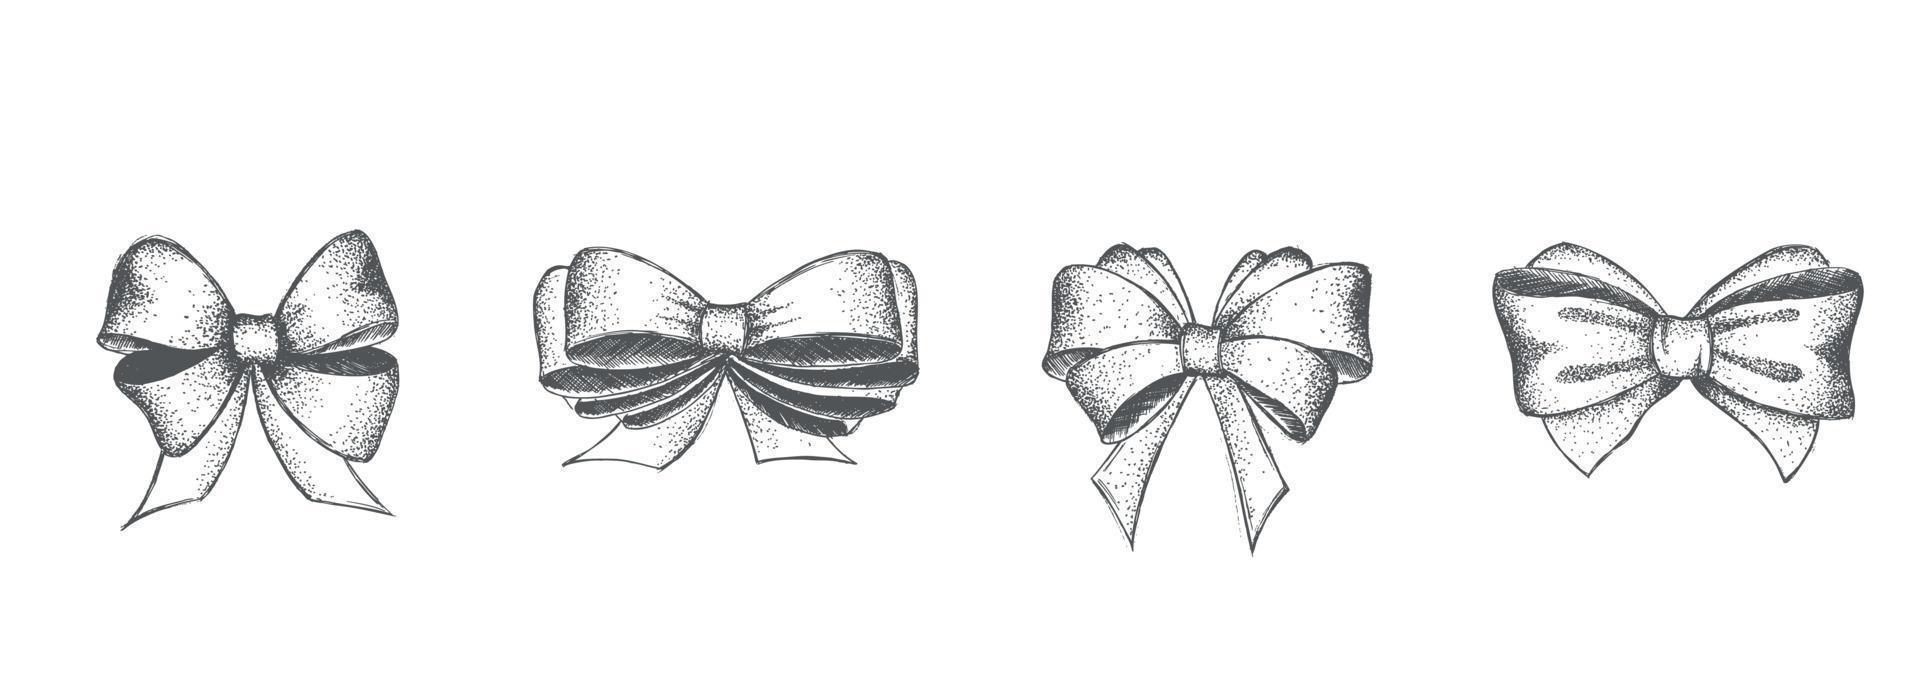 Decorative bows. Hand drawn illustration. vector